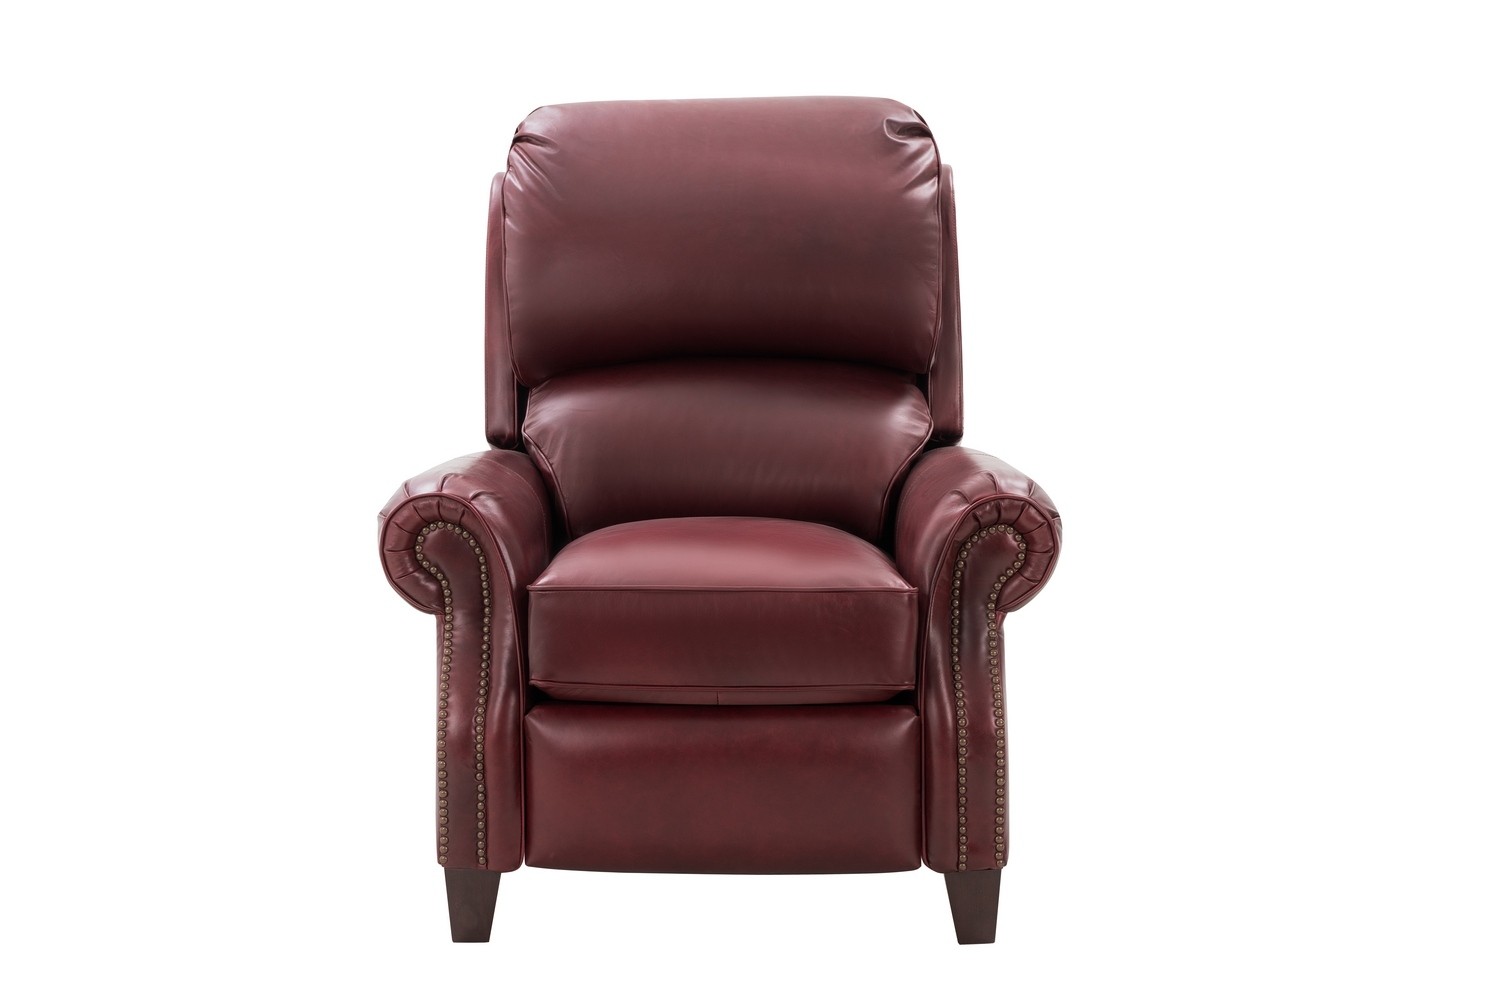 Barcalounger Churchill Recliner Chair - Emerson Sangria/Top Grain Leather